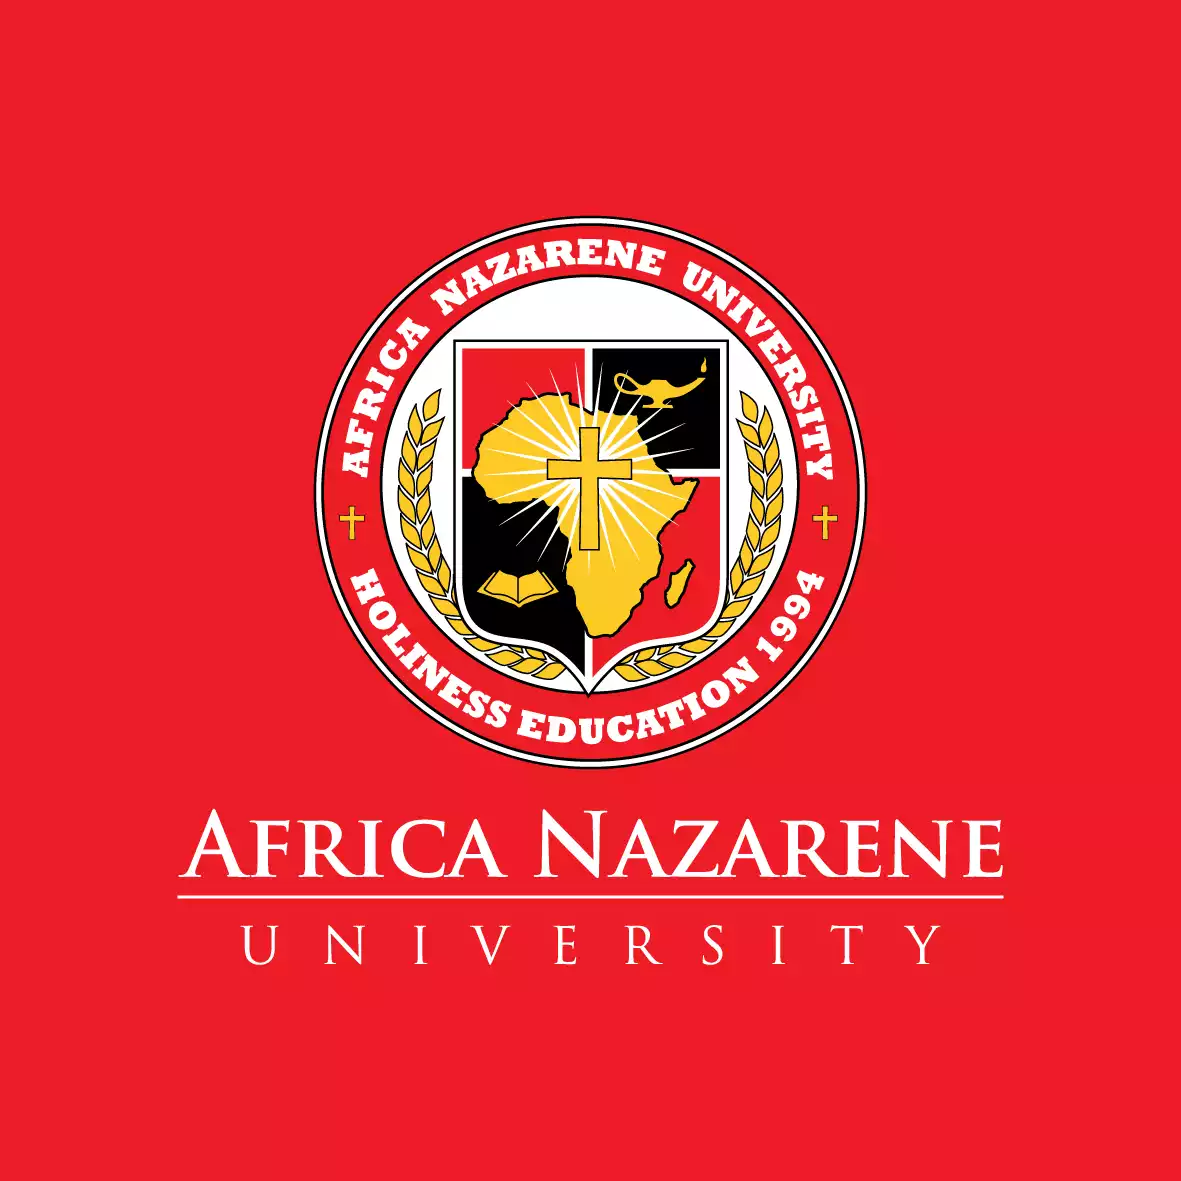 Africa Nazarene University Scholarship programs